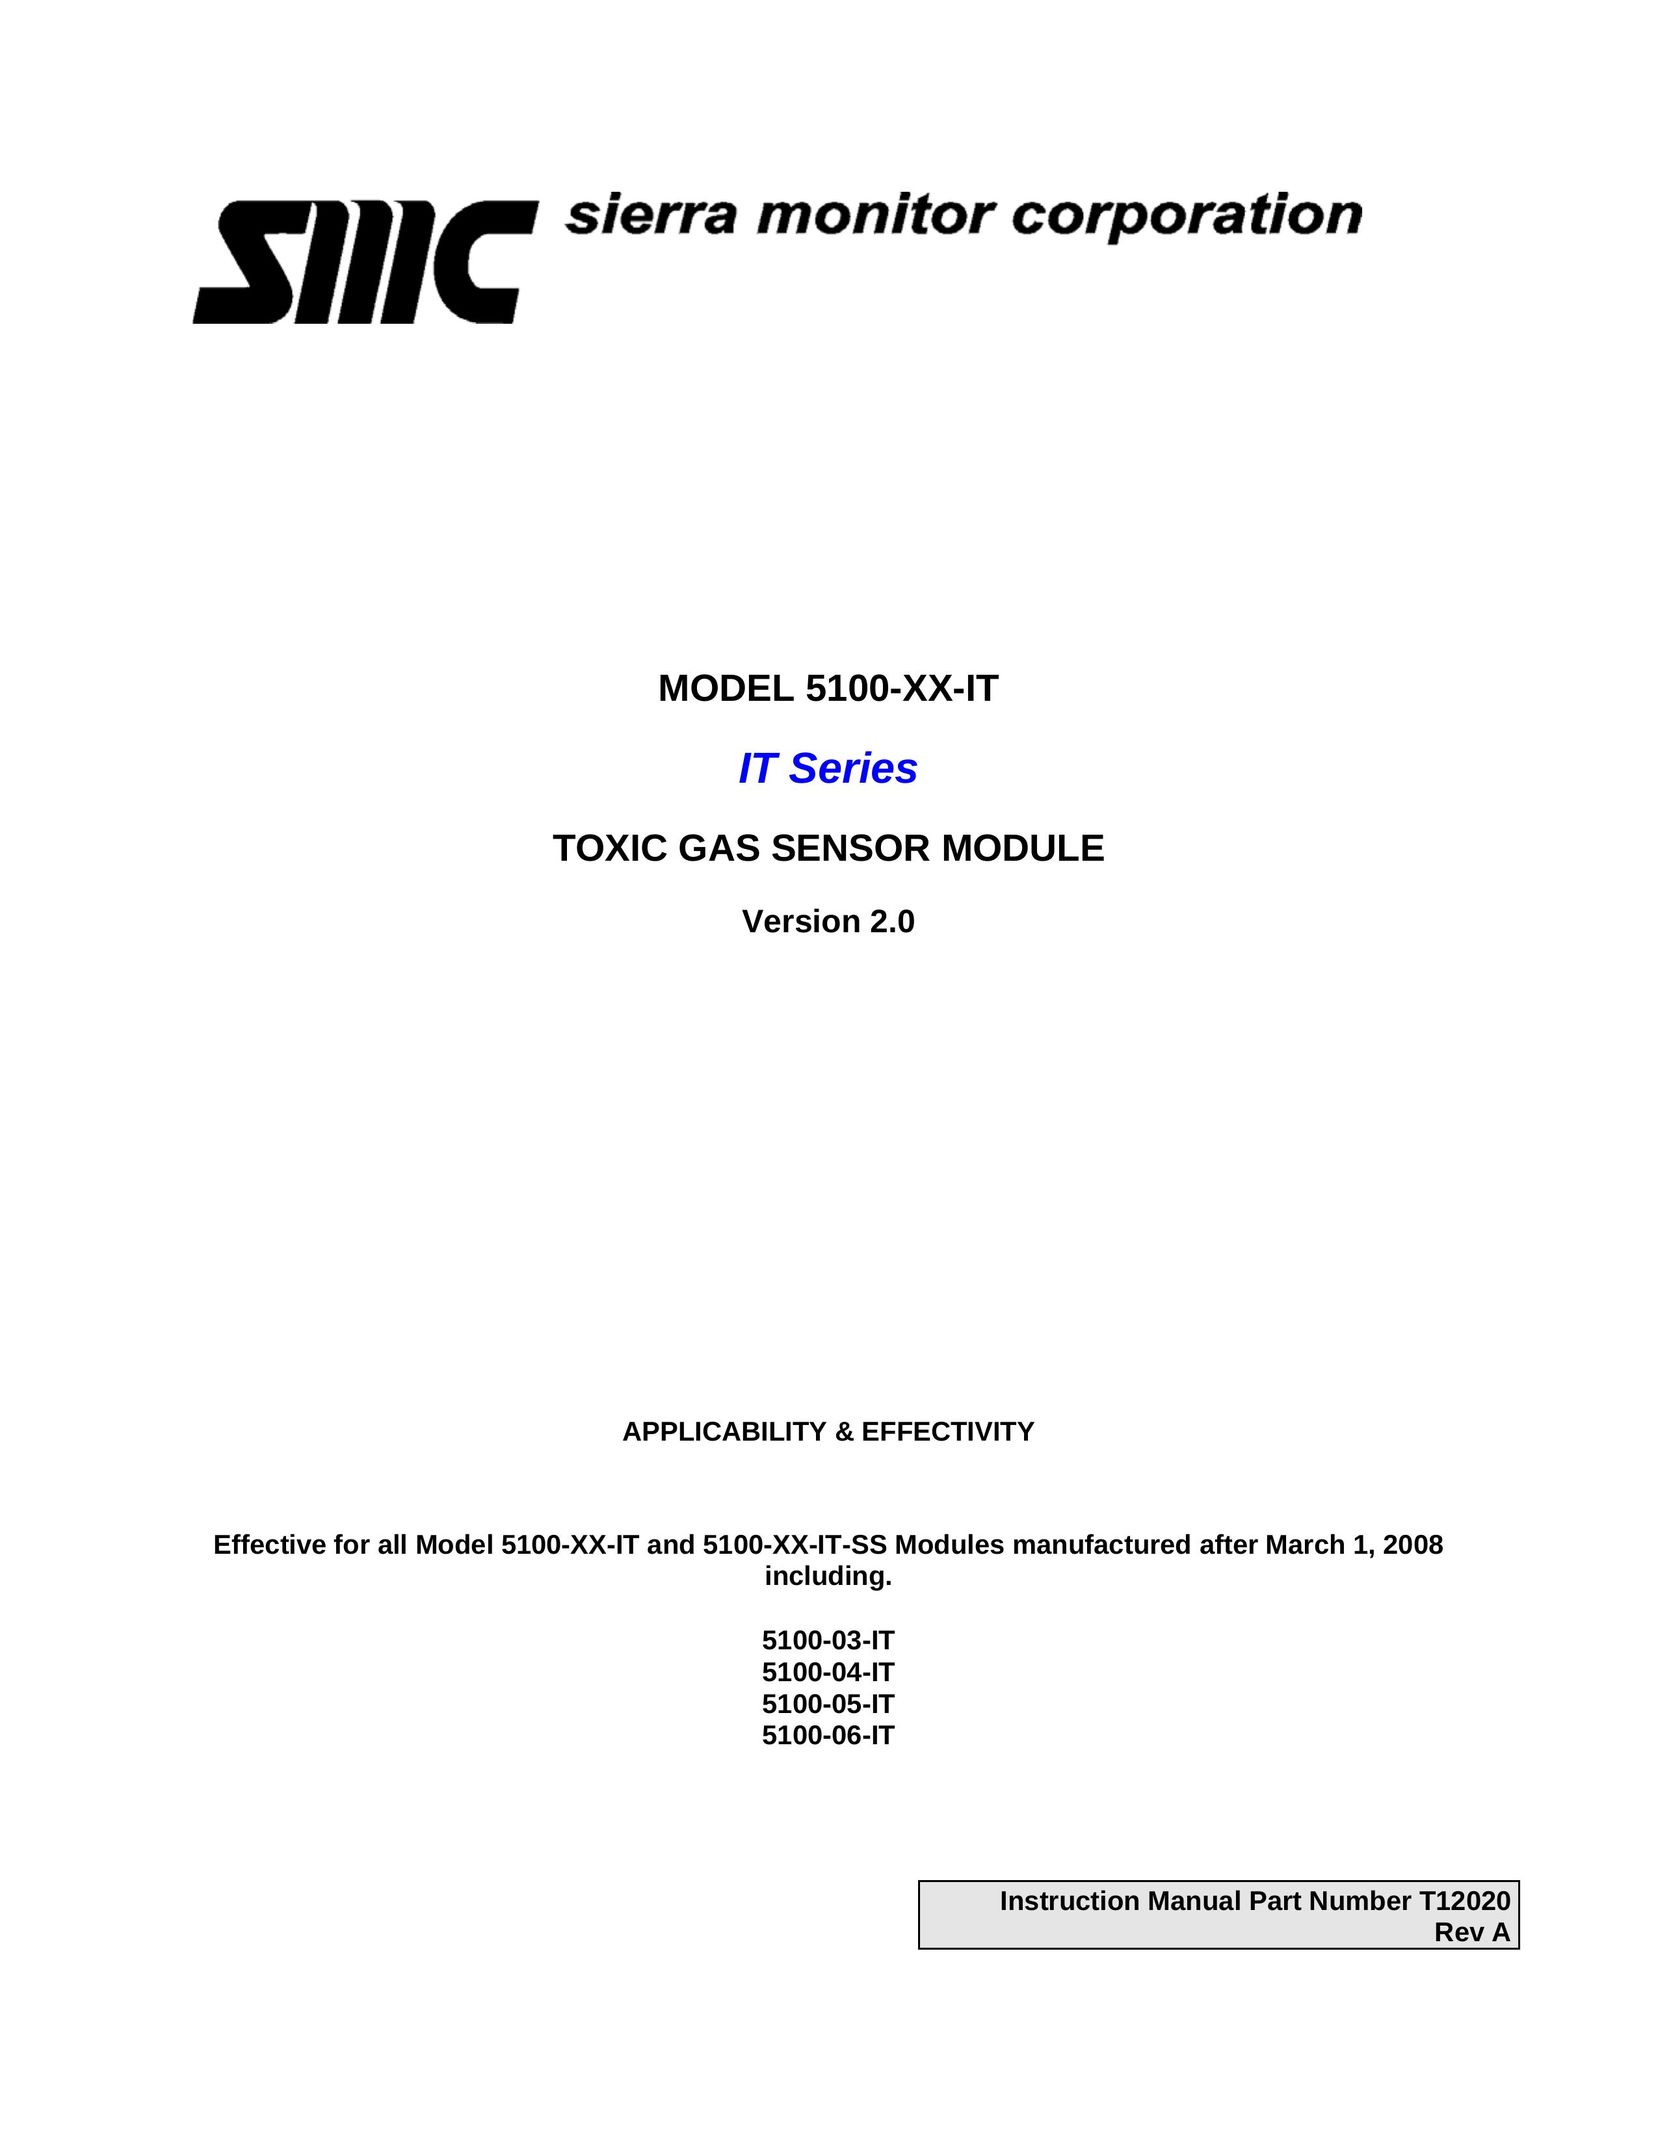 Sierra Monitor Corporation 5100-05-IT Carbon Monoxide Alarm User Manual